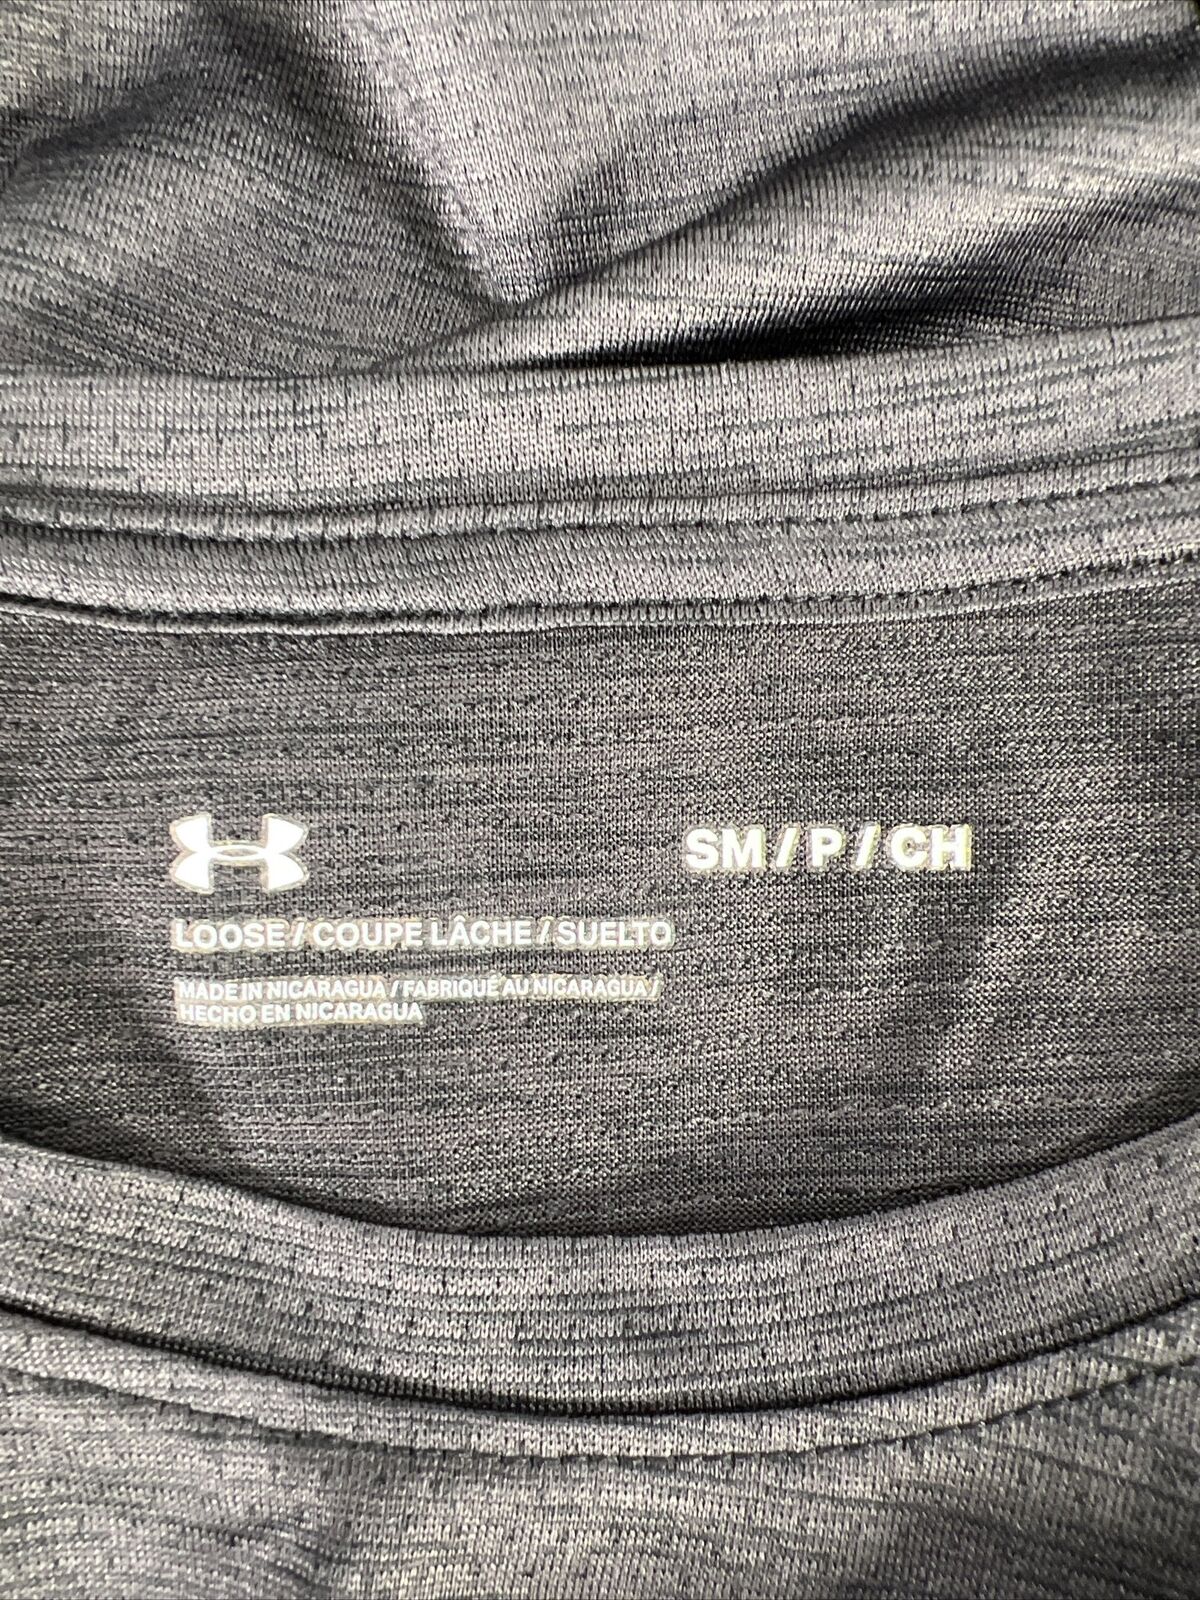 Under Armour Camiseta deportiva gris Vent Loose Fit para hombre - S